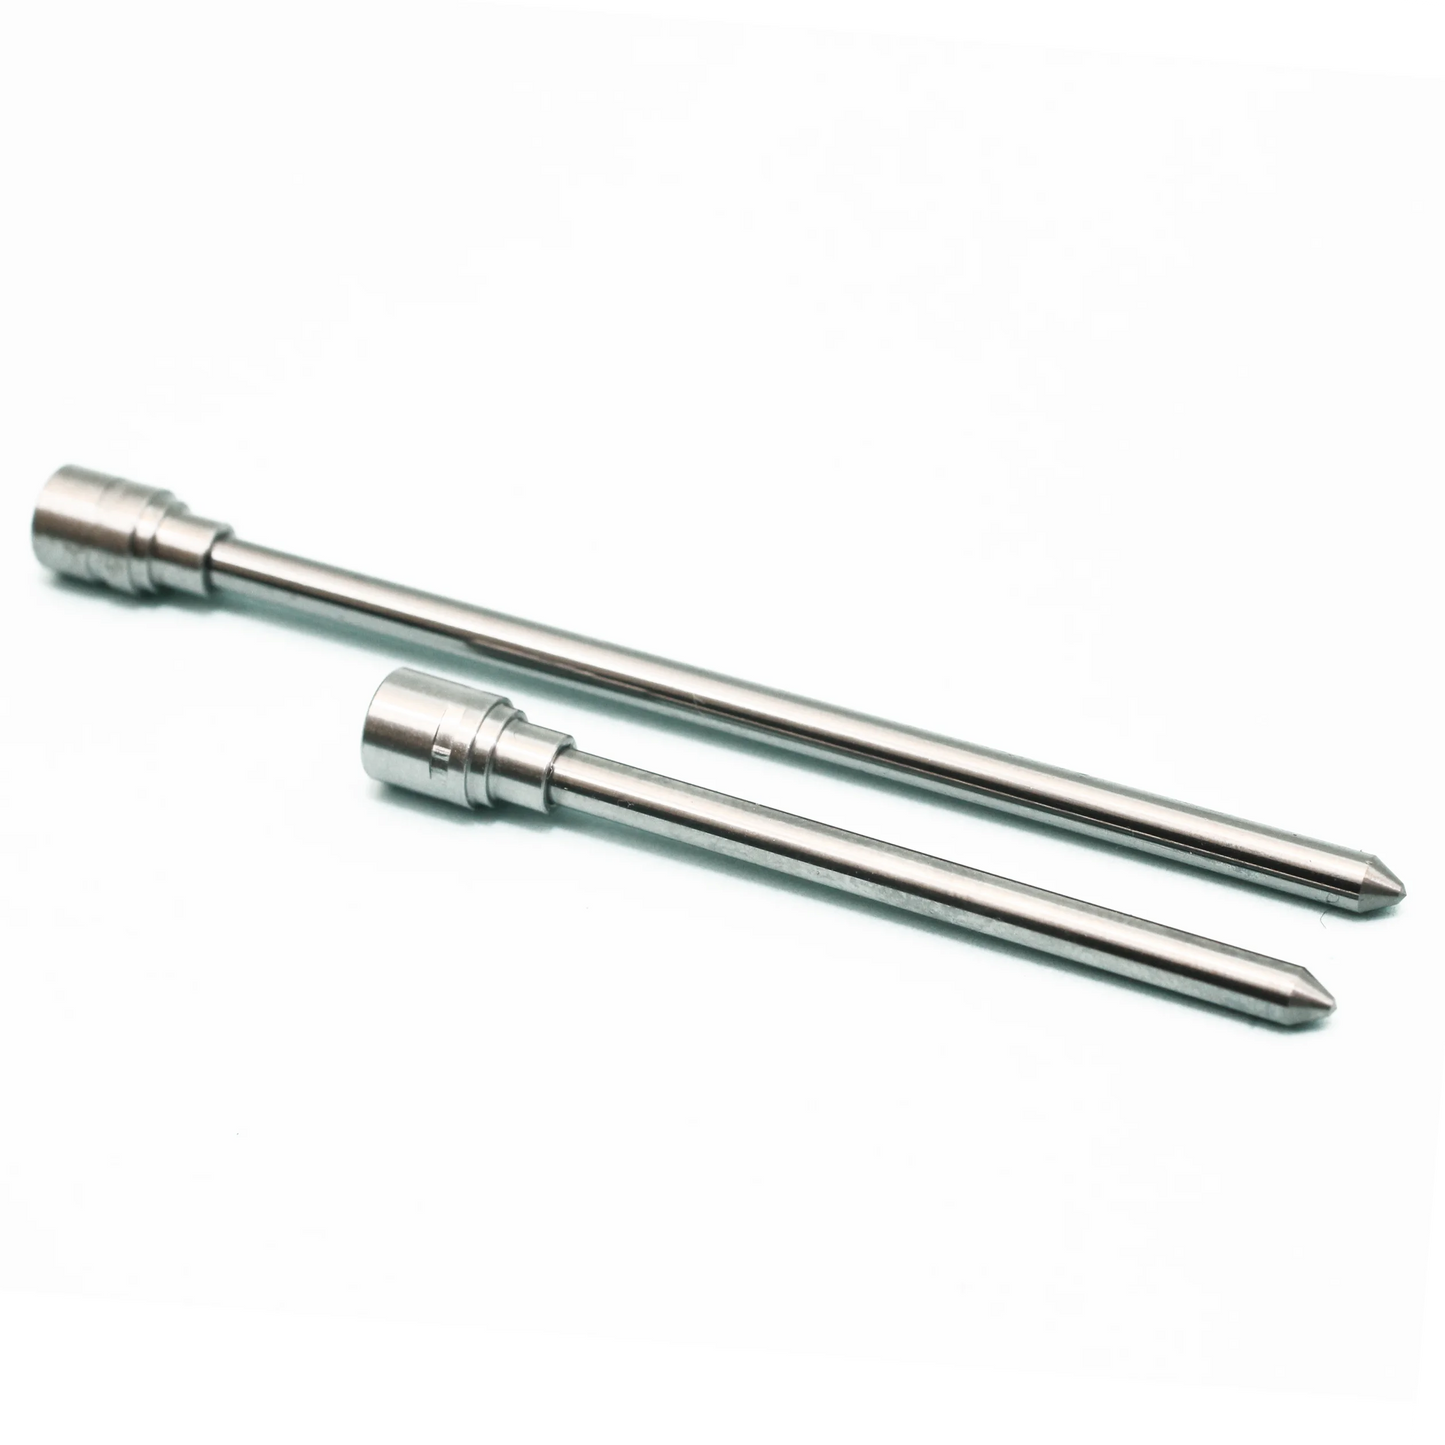 Carbide Pin - 40° Tip angle, Extra Length